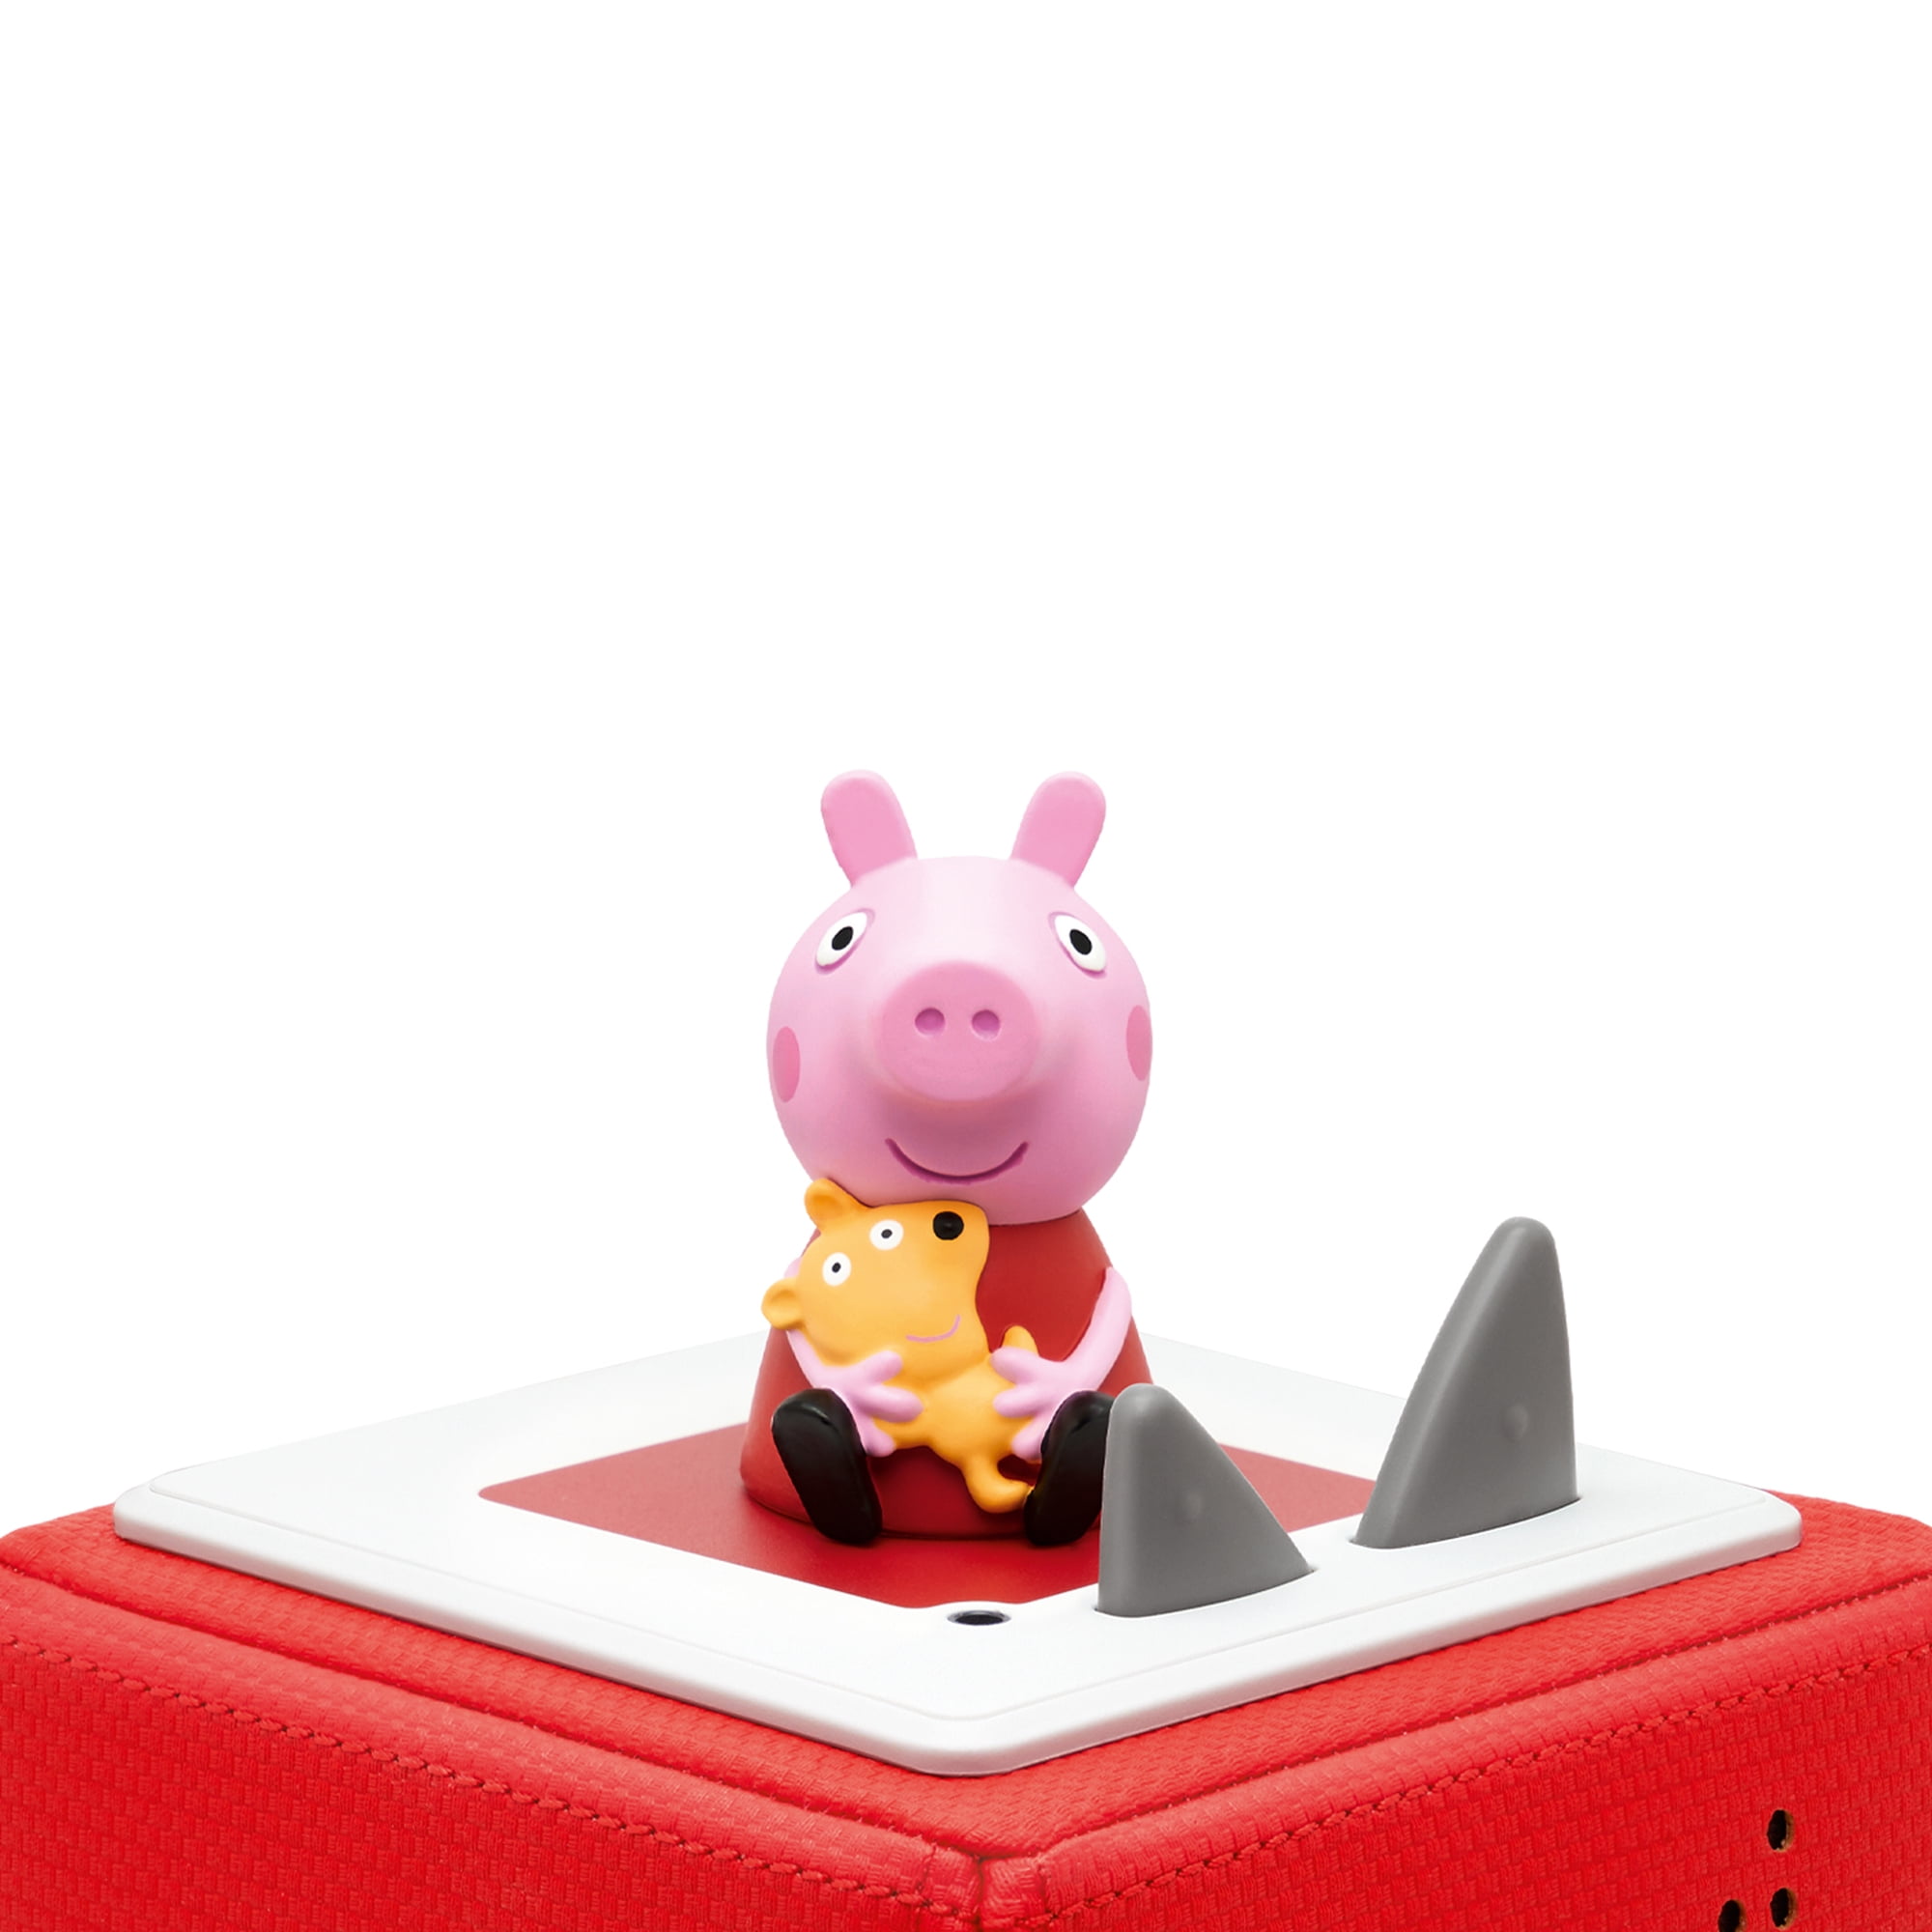 Figura Peppa Pig Comansi Y90071 - Juguetería - Figura Peppa Pig